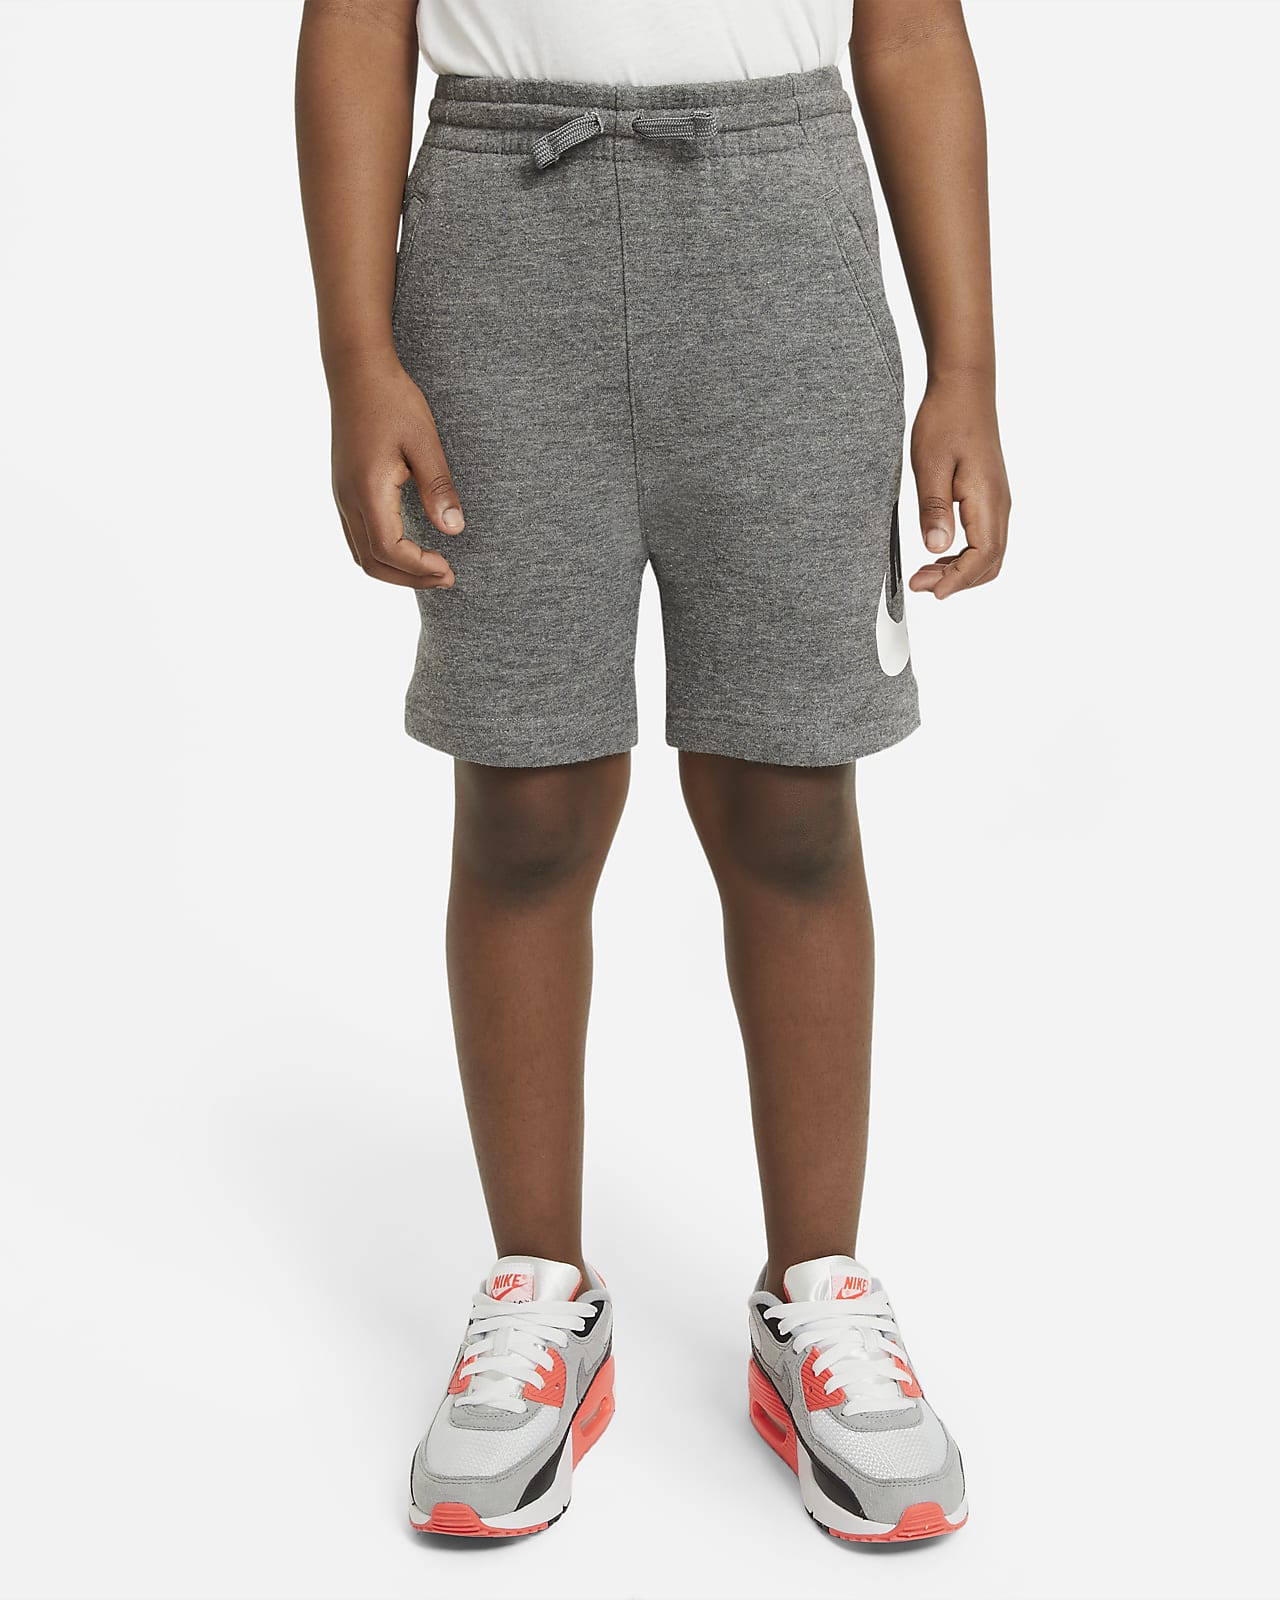 Nike Pantalons curts - Nen/a petit/a